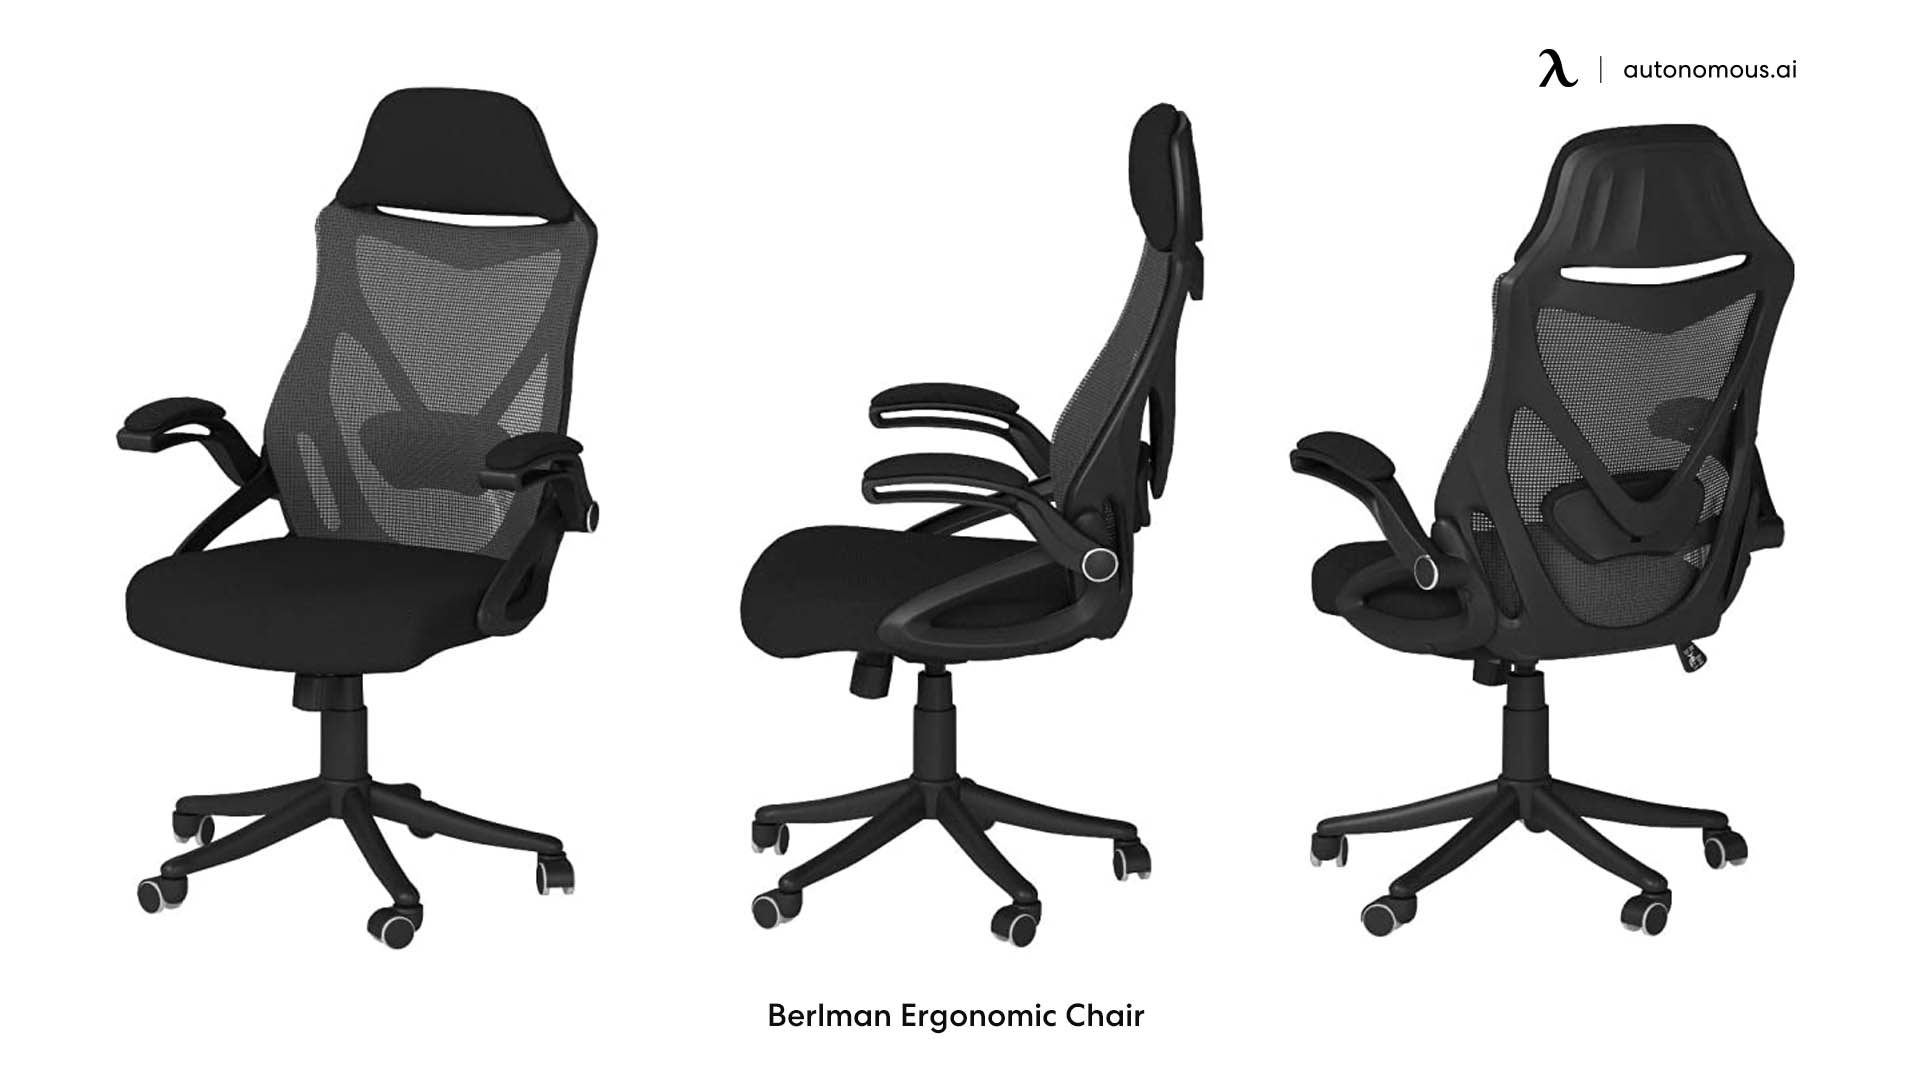 Berlman's ergonomic swivel chair